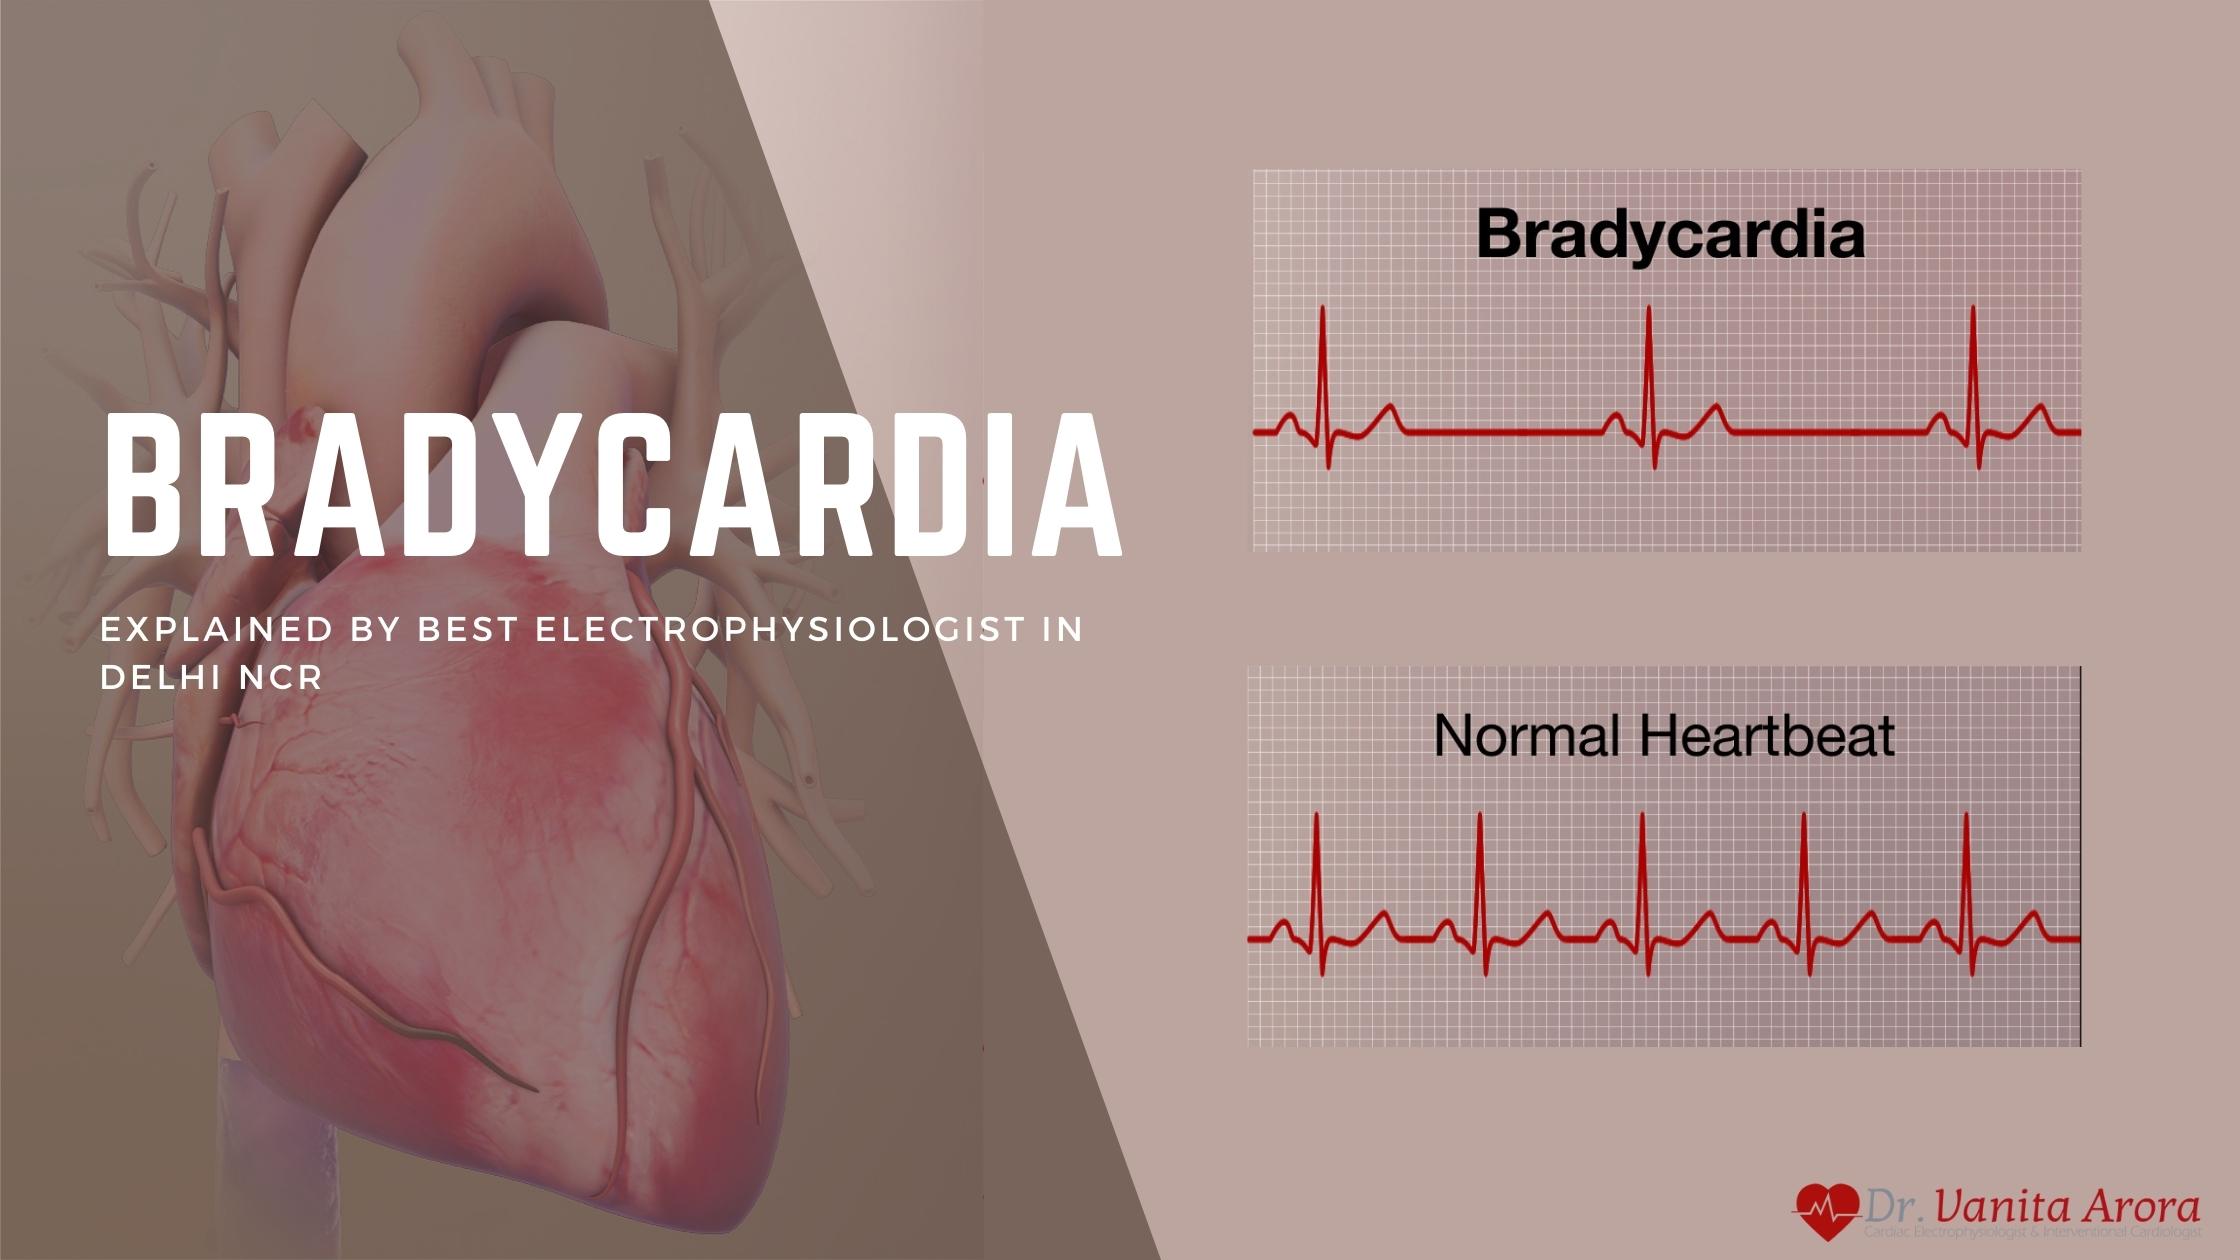 Bradycardia (Slow Heart Rate) Explained by Dr. Vanita Arora